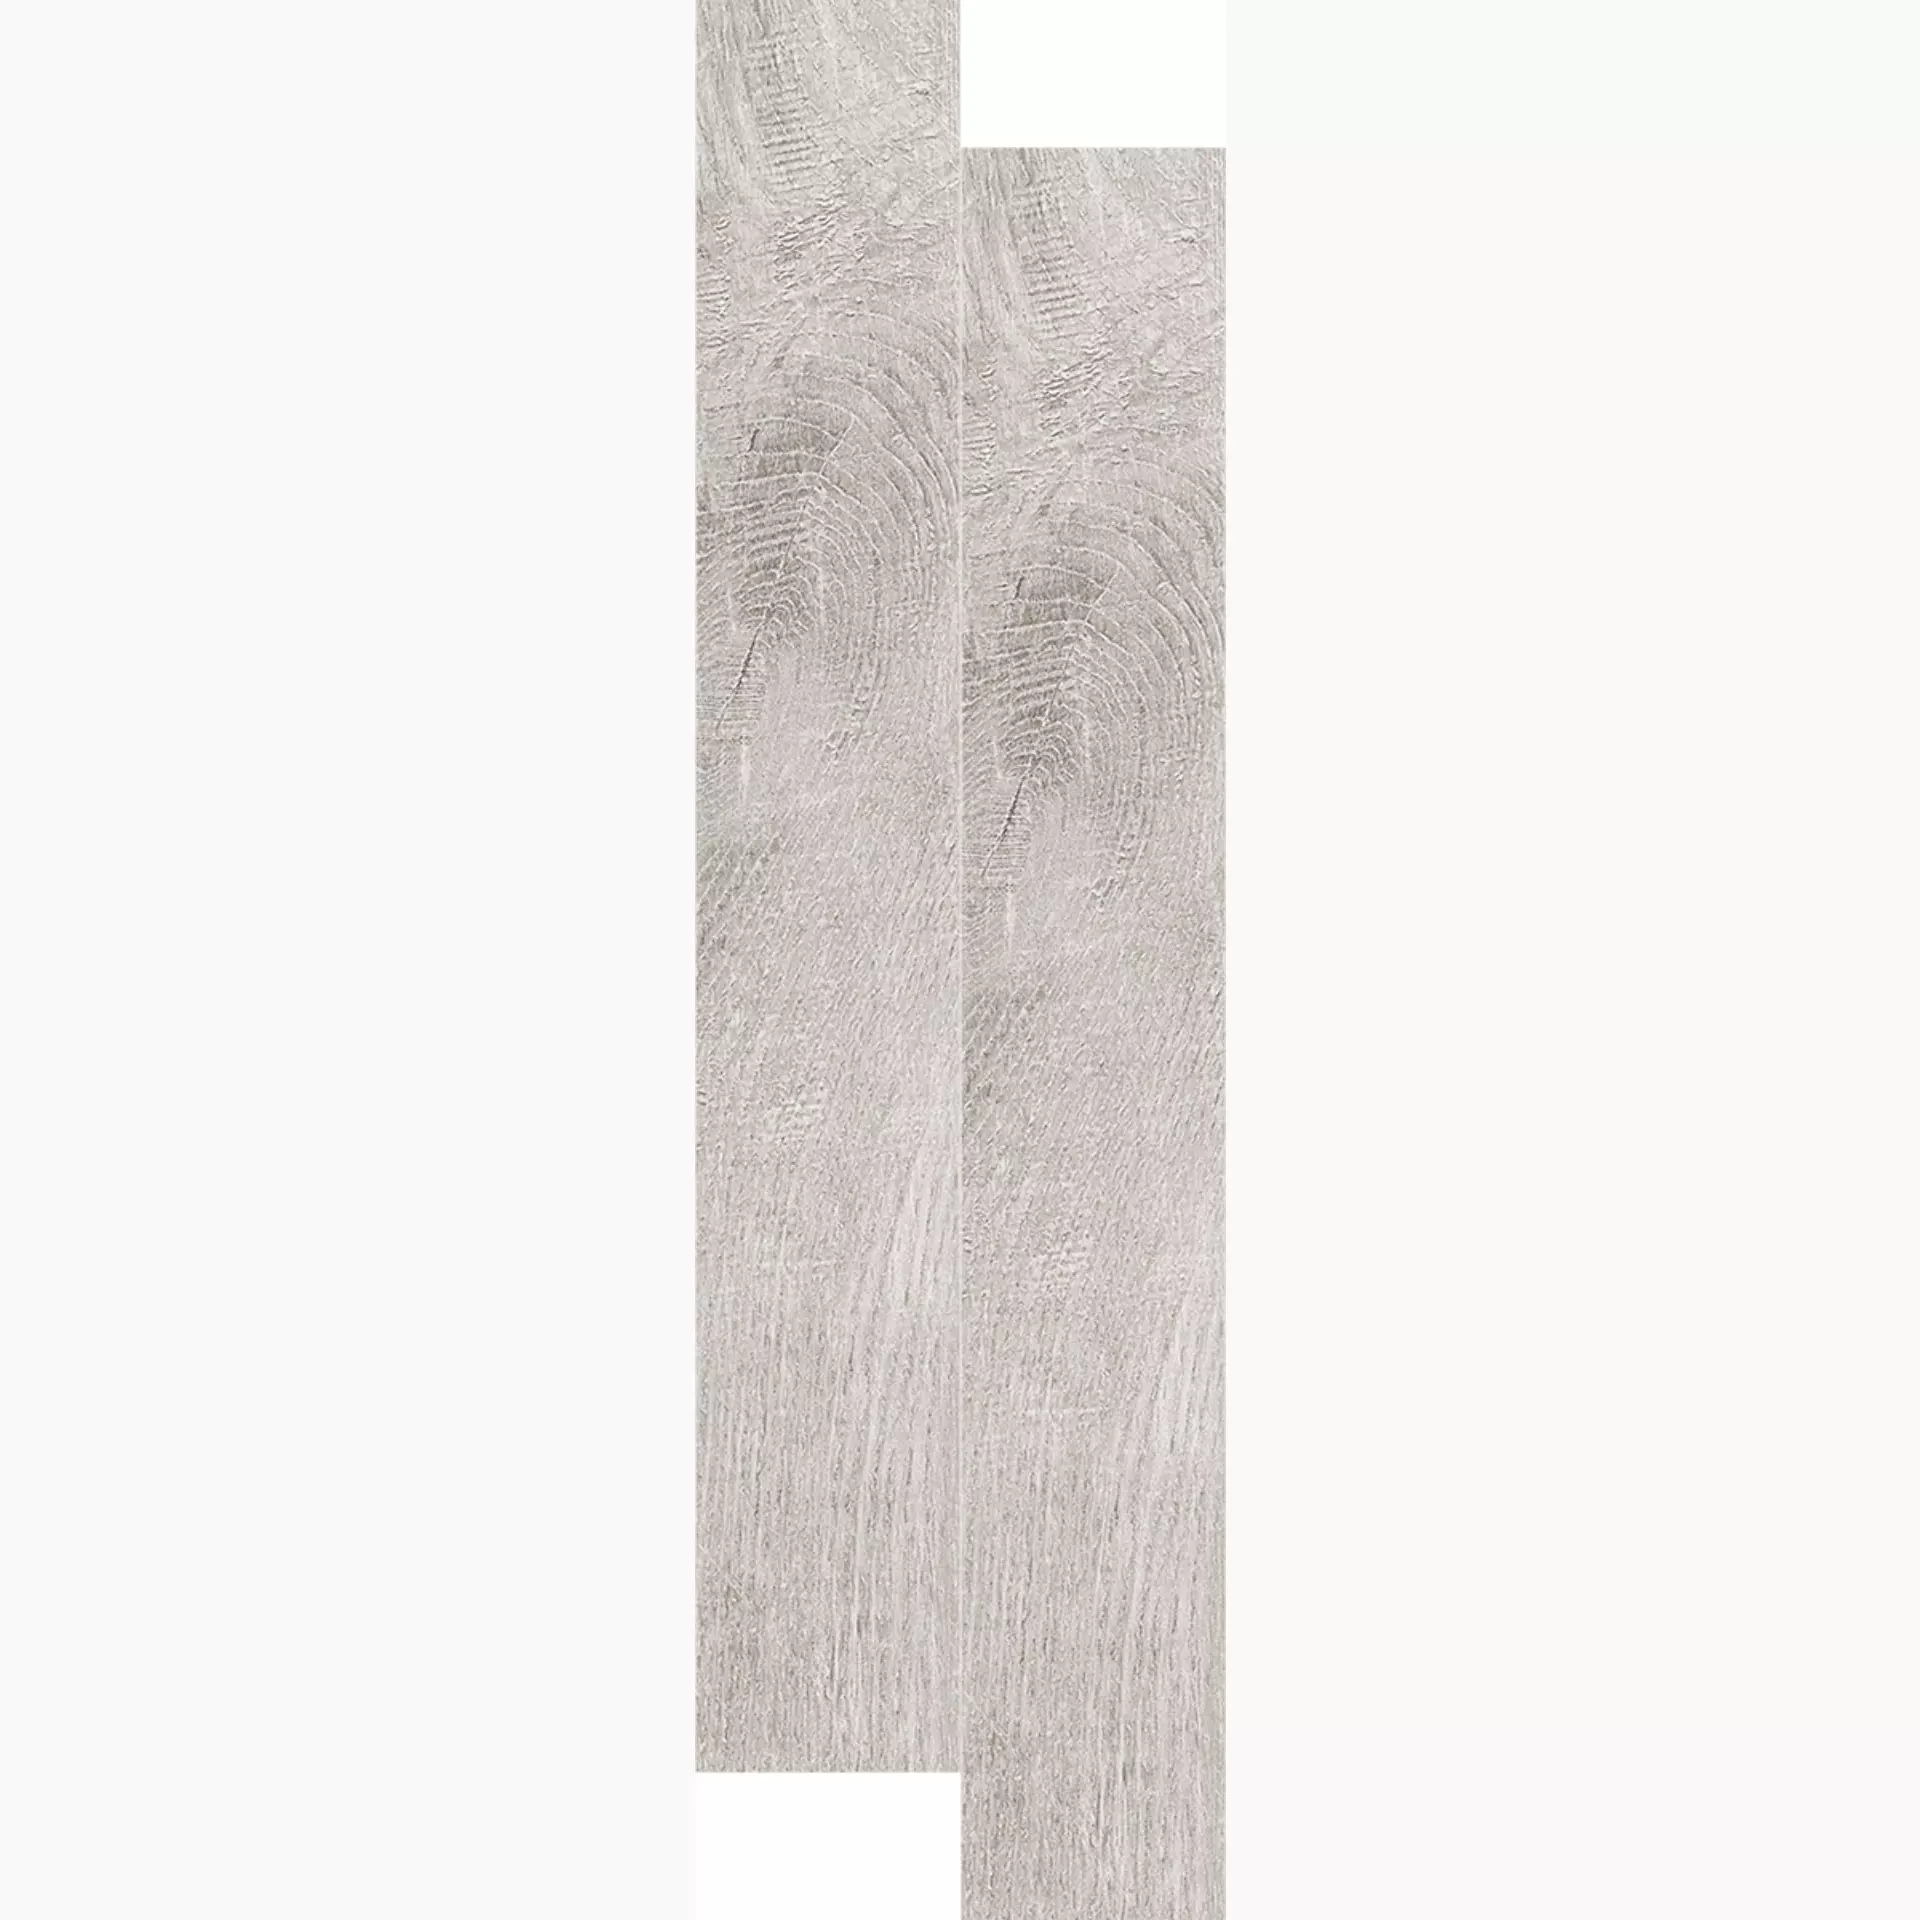 Rondine Tabula Fog Naturale J84616 15x100cm 9,5mm